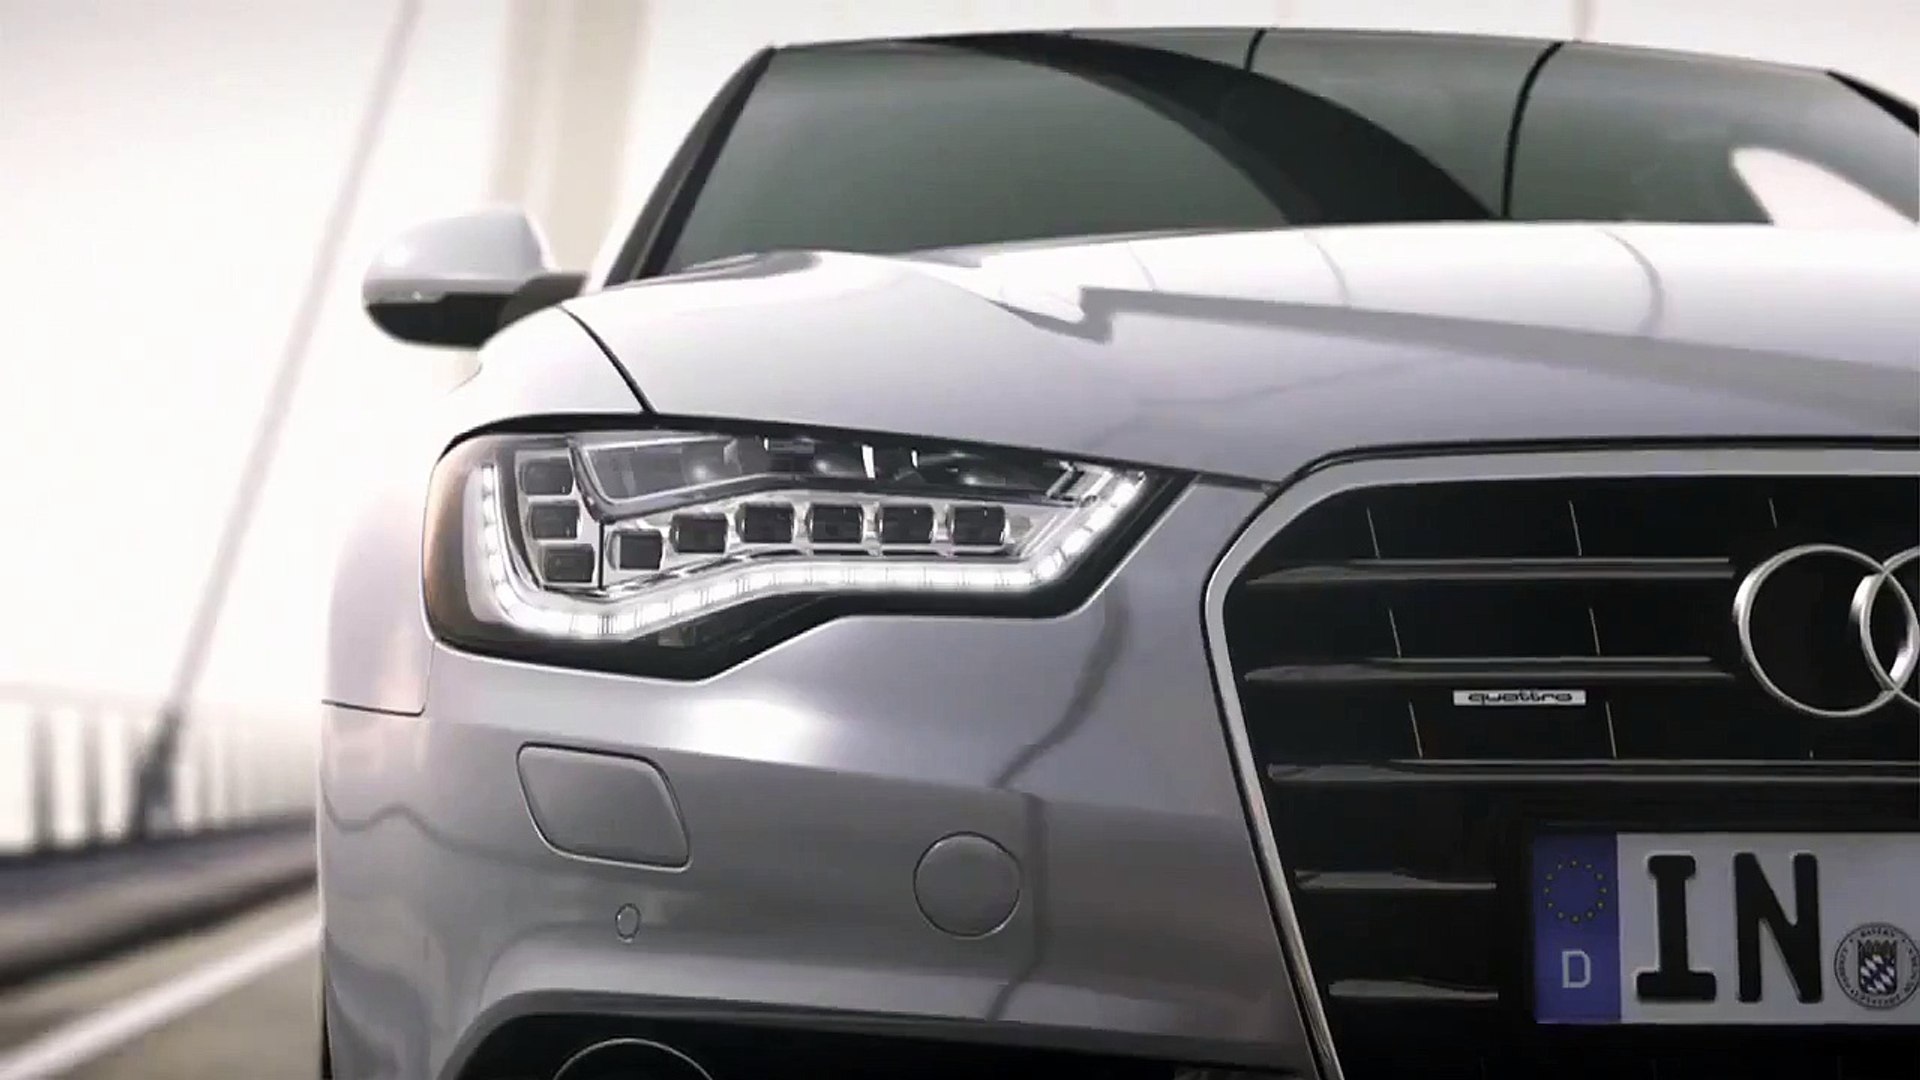 Audi A6 2011 - LED Headlights promo - video Dailymotion